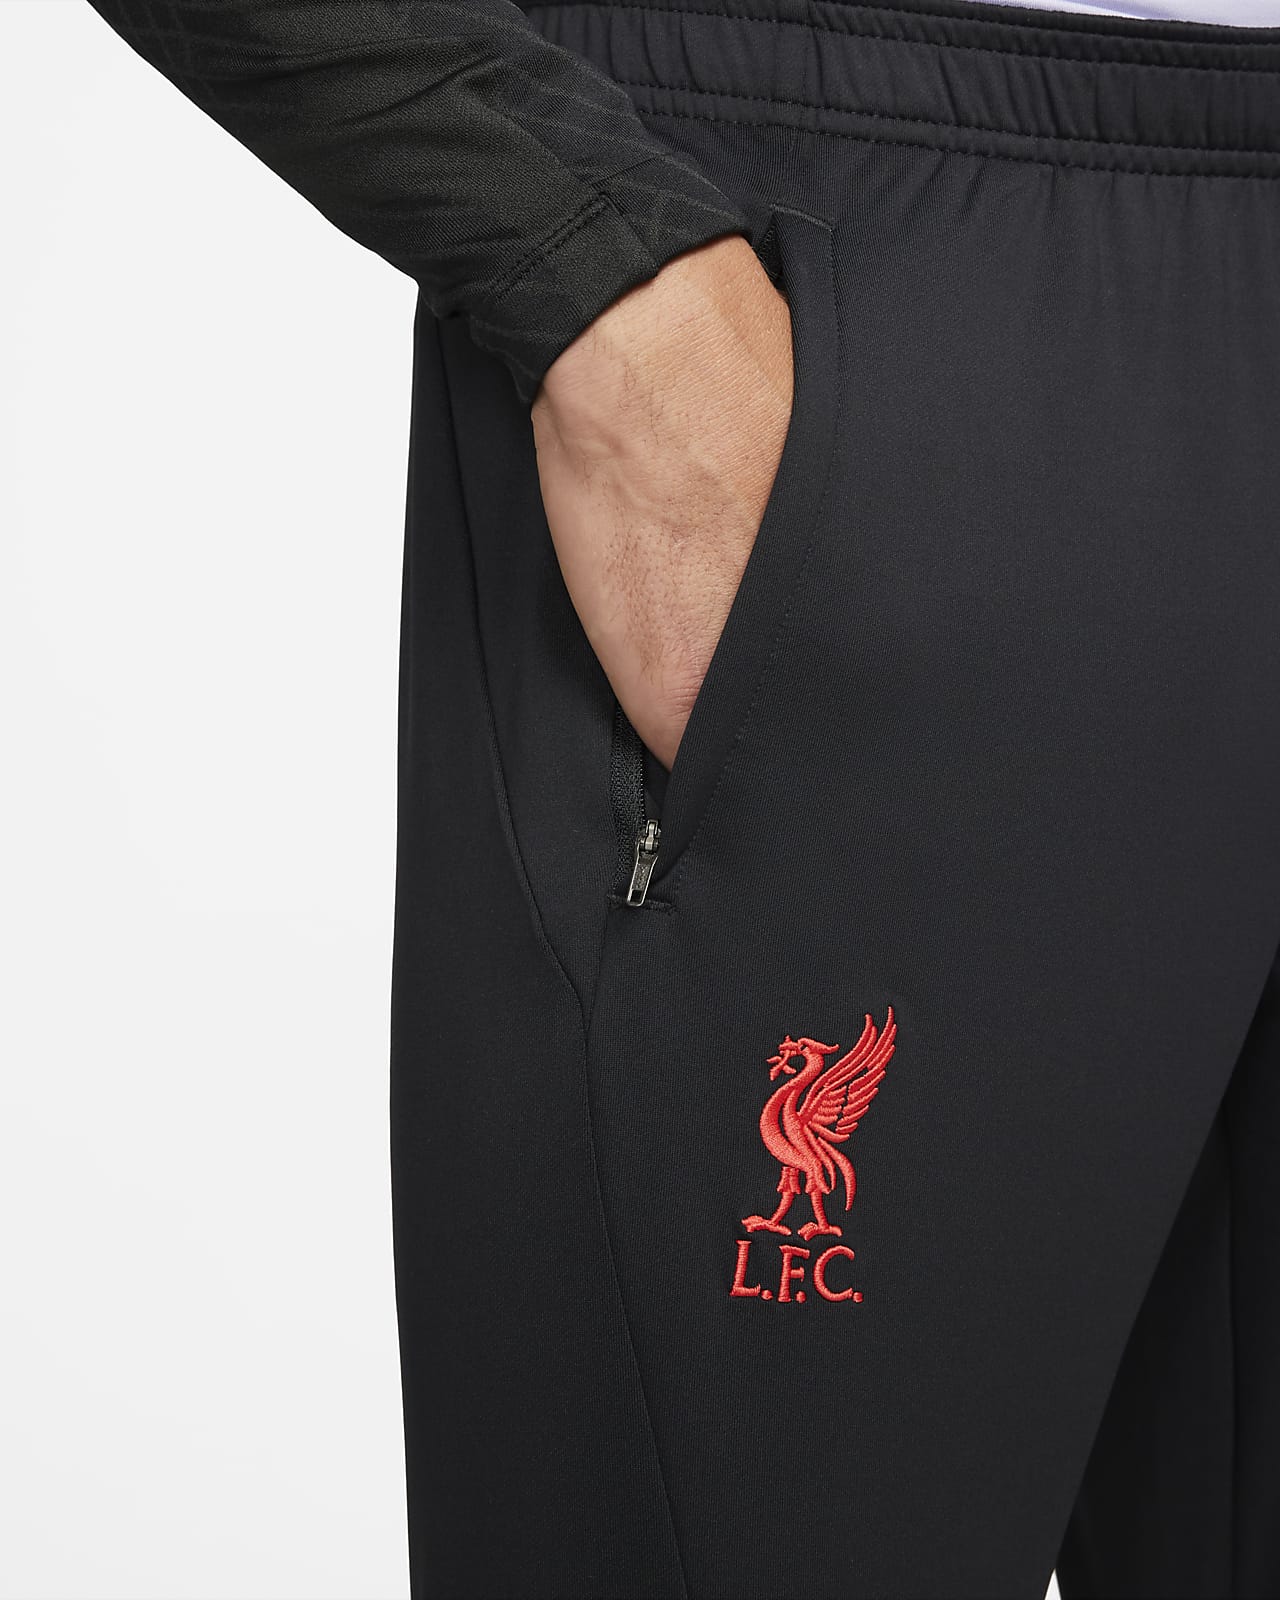 Liverpool F.C. Pants & Tights.